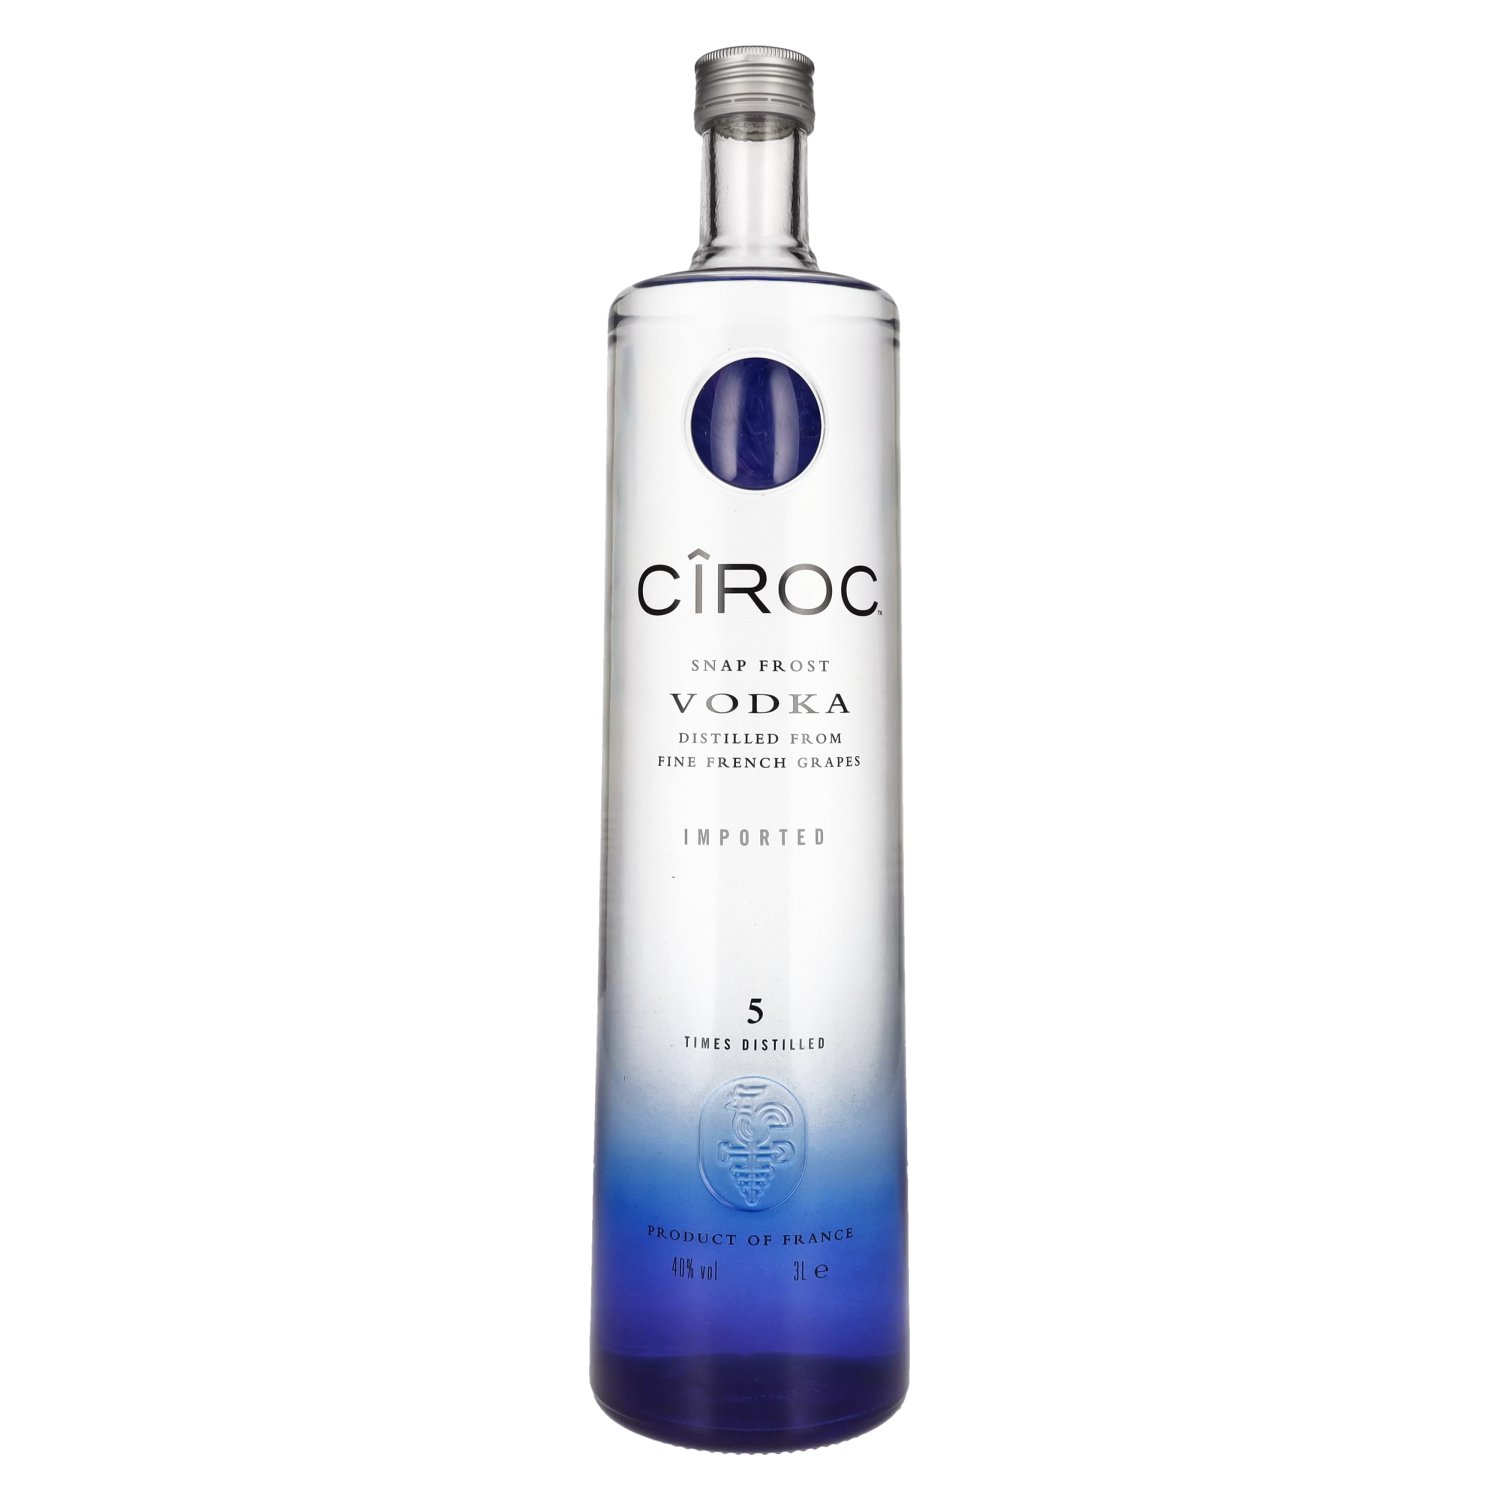 - SNAP FROST Vol. 3l delicando 40% Vodka Cîroc